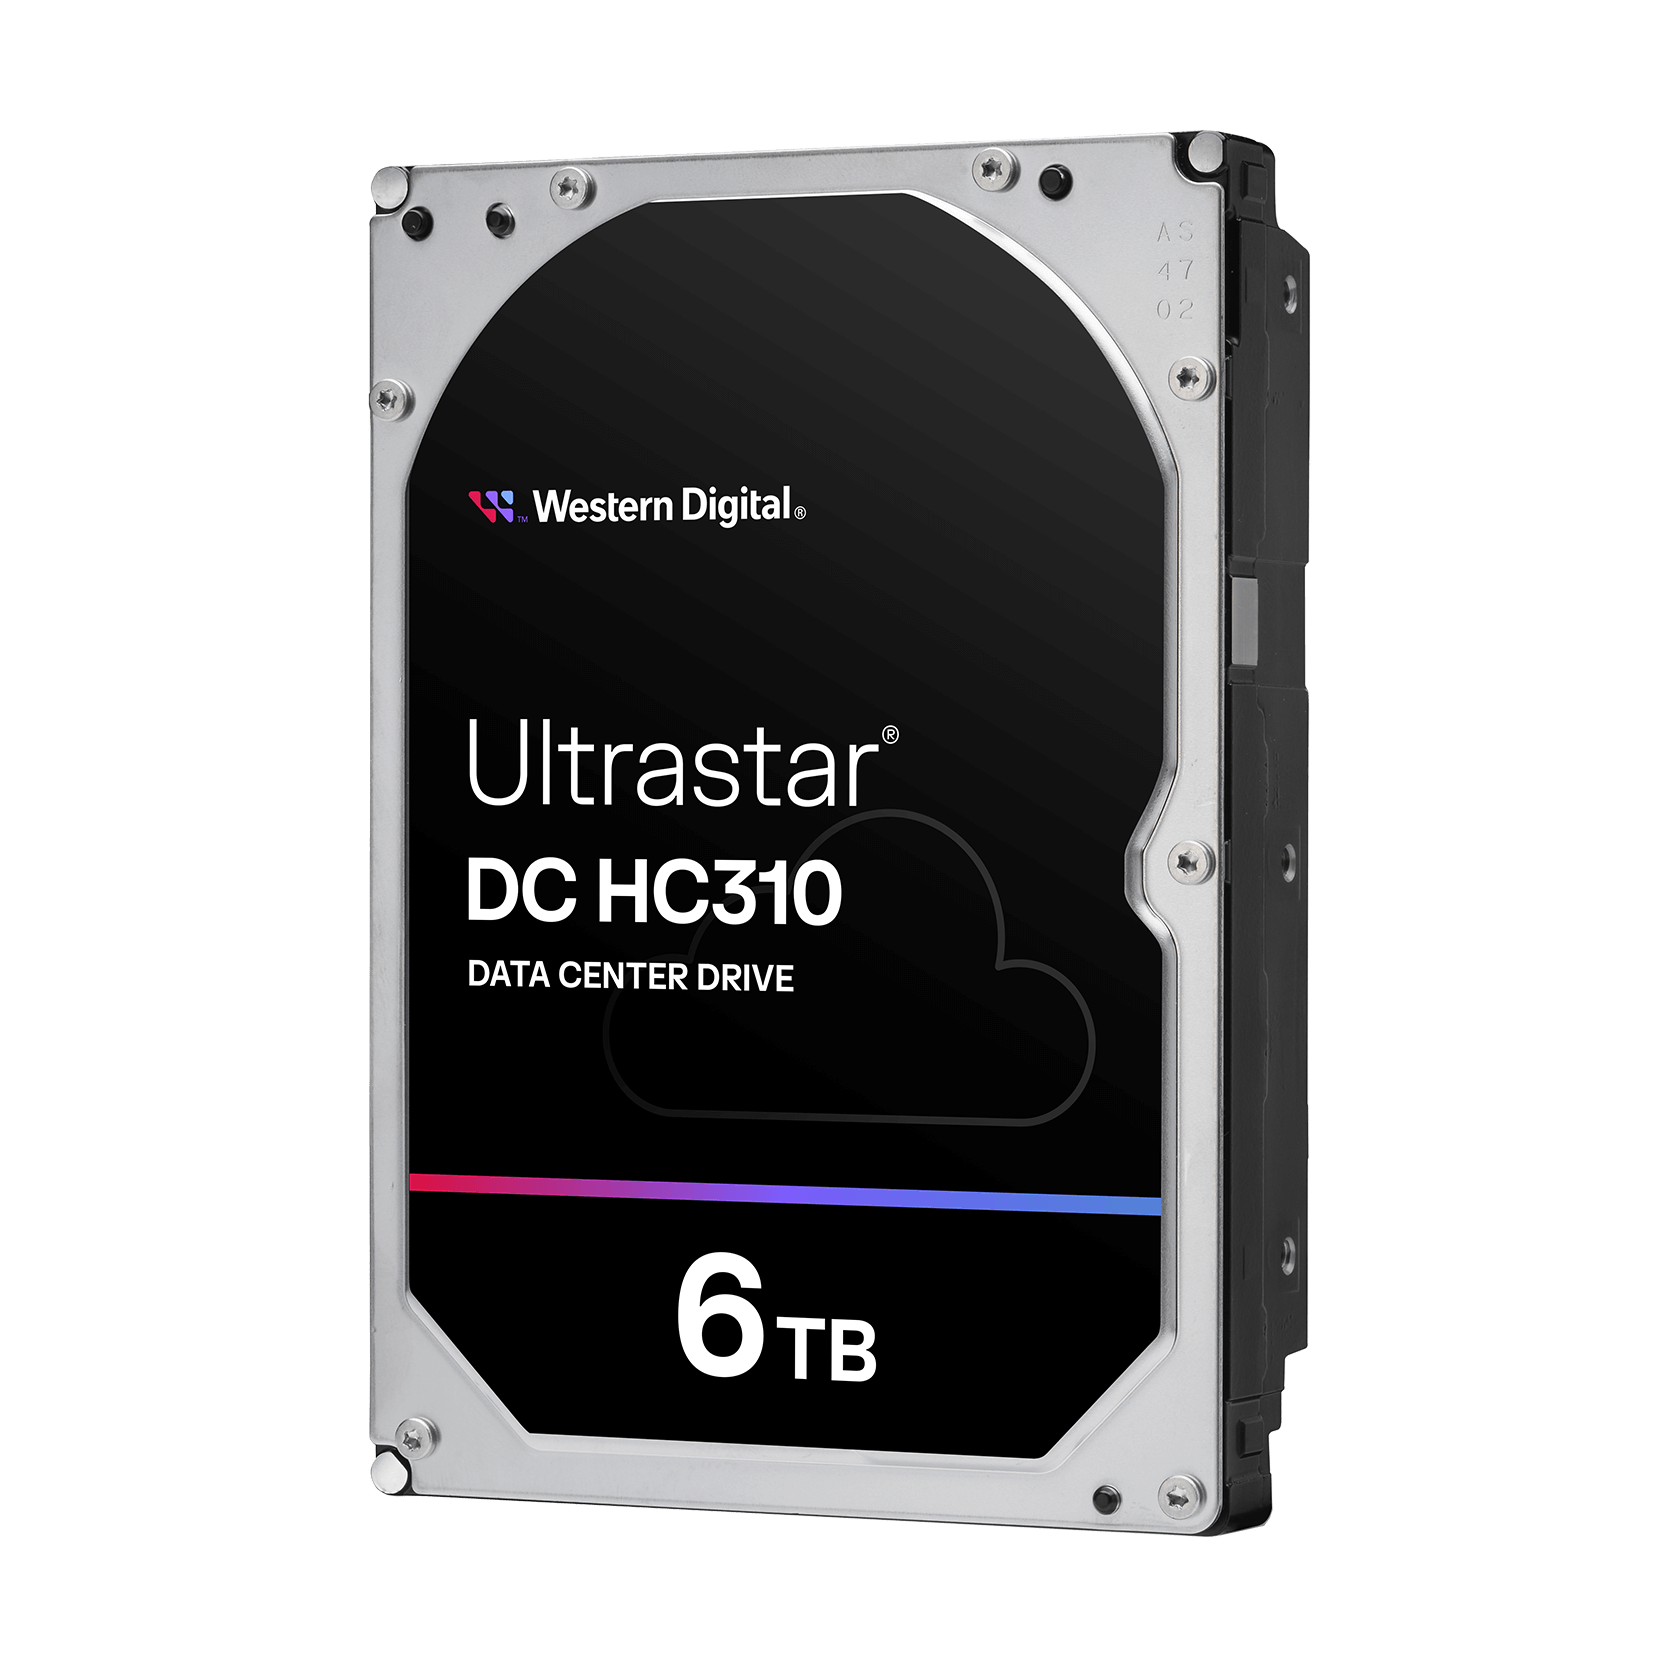 Western Digital 6TB Ultrastar® DC HC310 Hard Drive - 0B36050